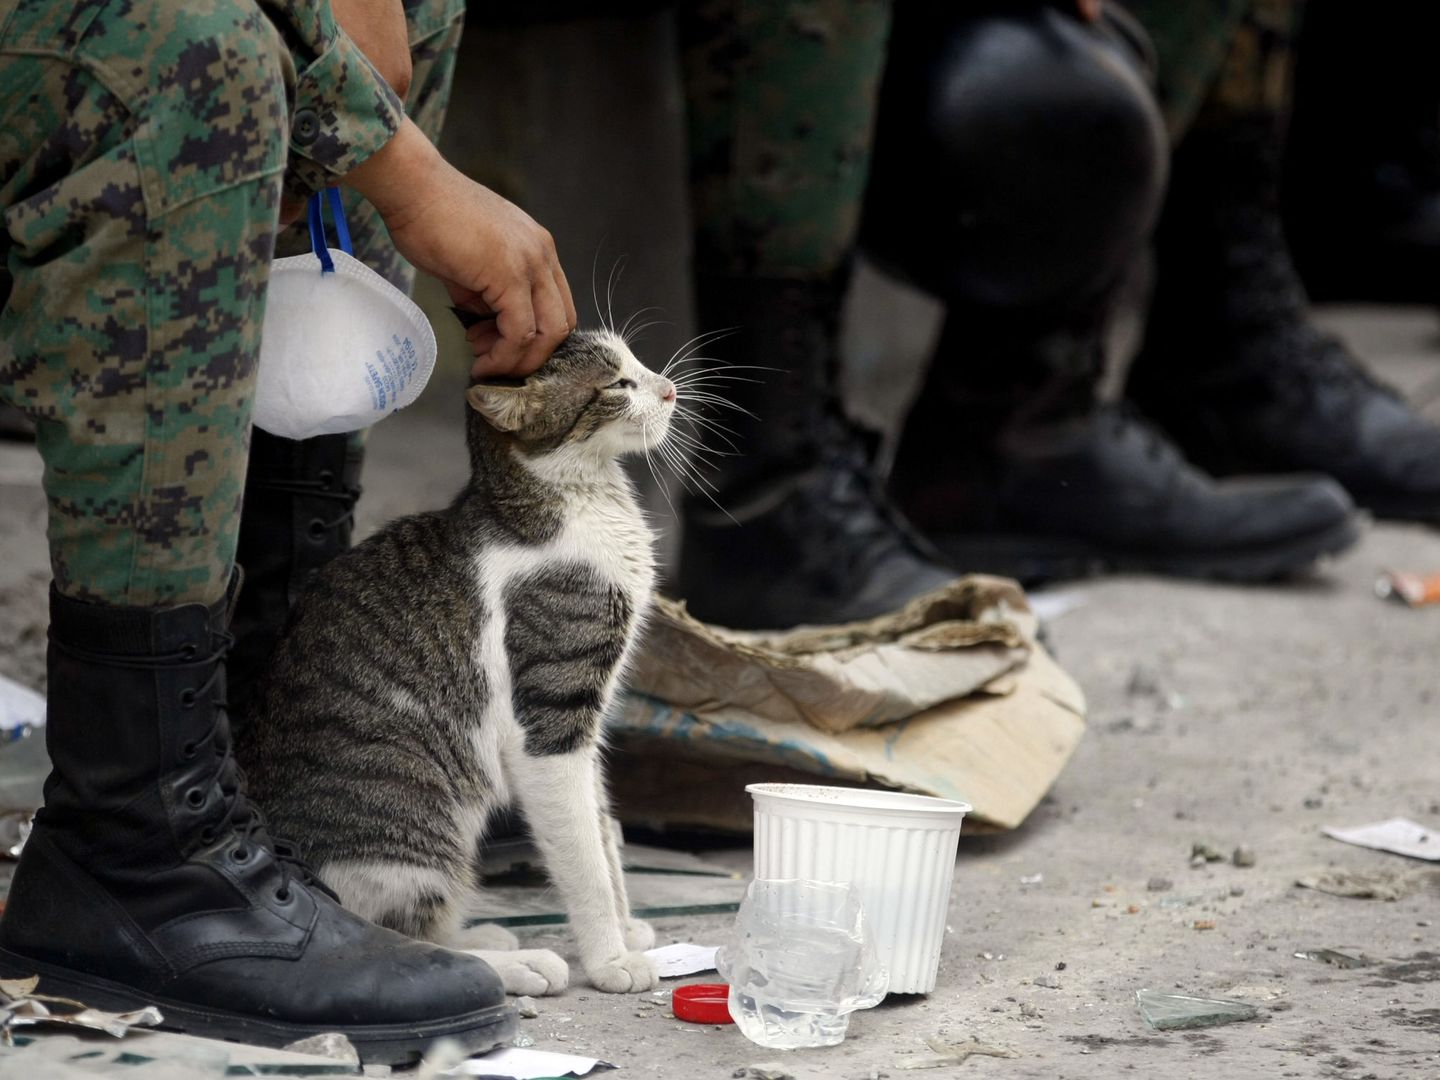 Un militar acaricia a un gato tras una intervención (EFE/Christian Escobar Mora)